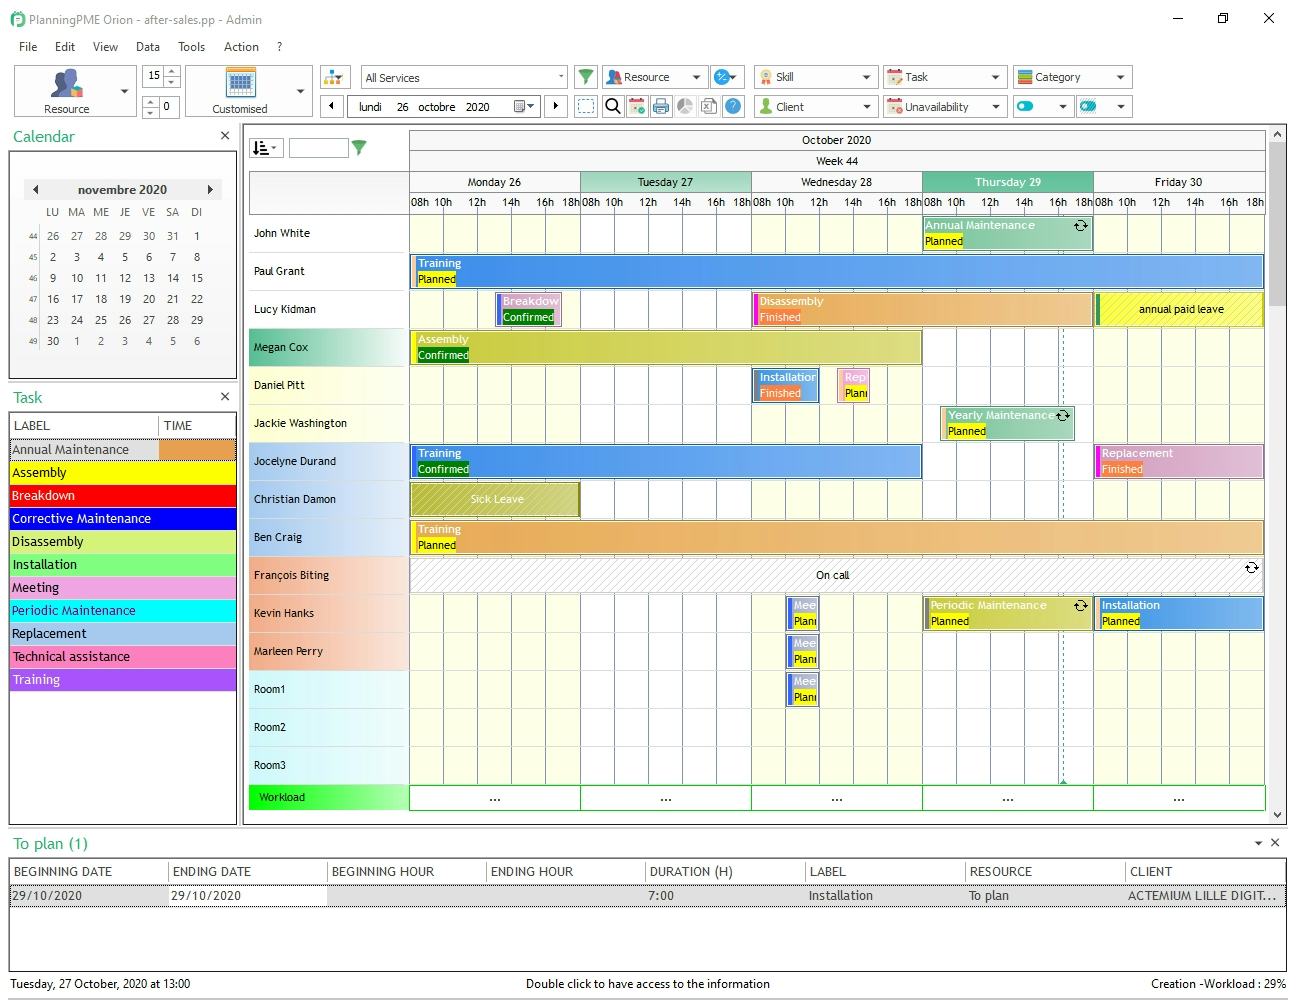 PlanningPME Software - 4